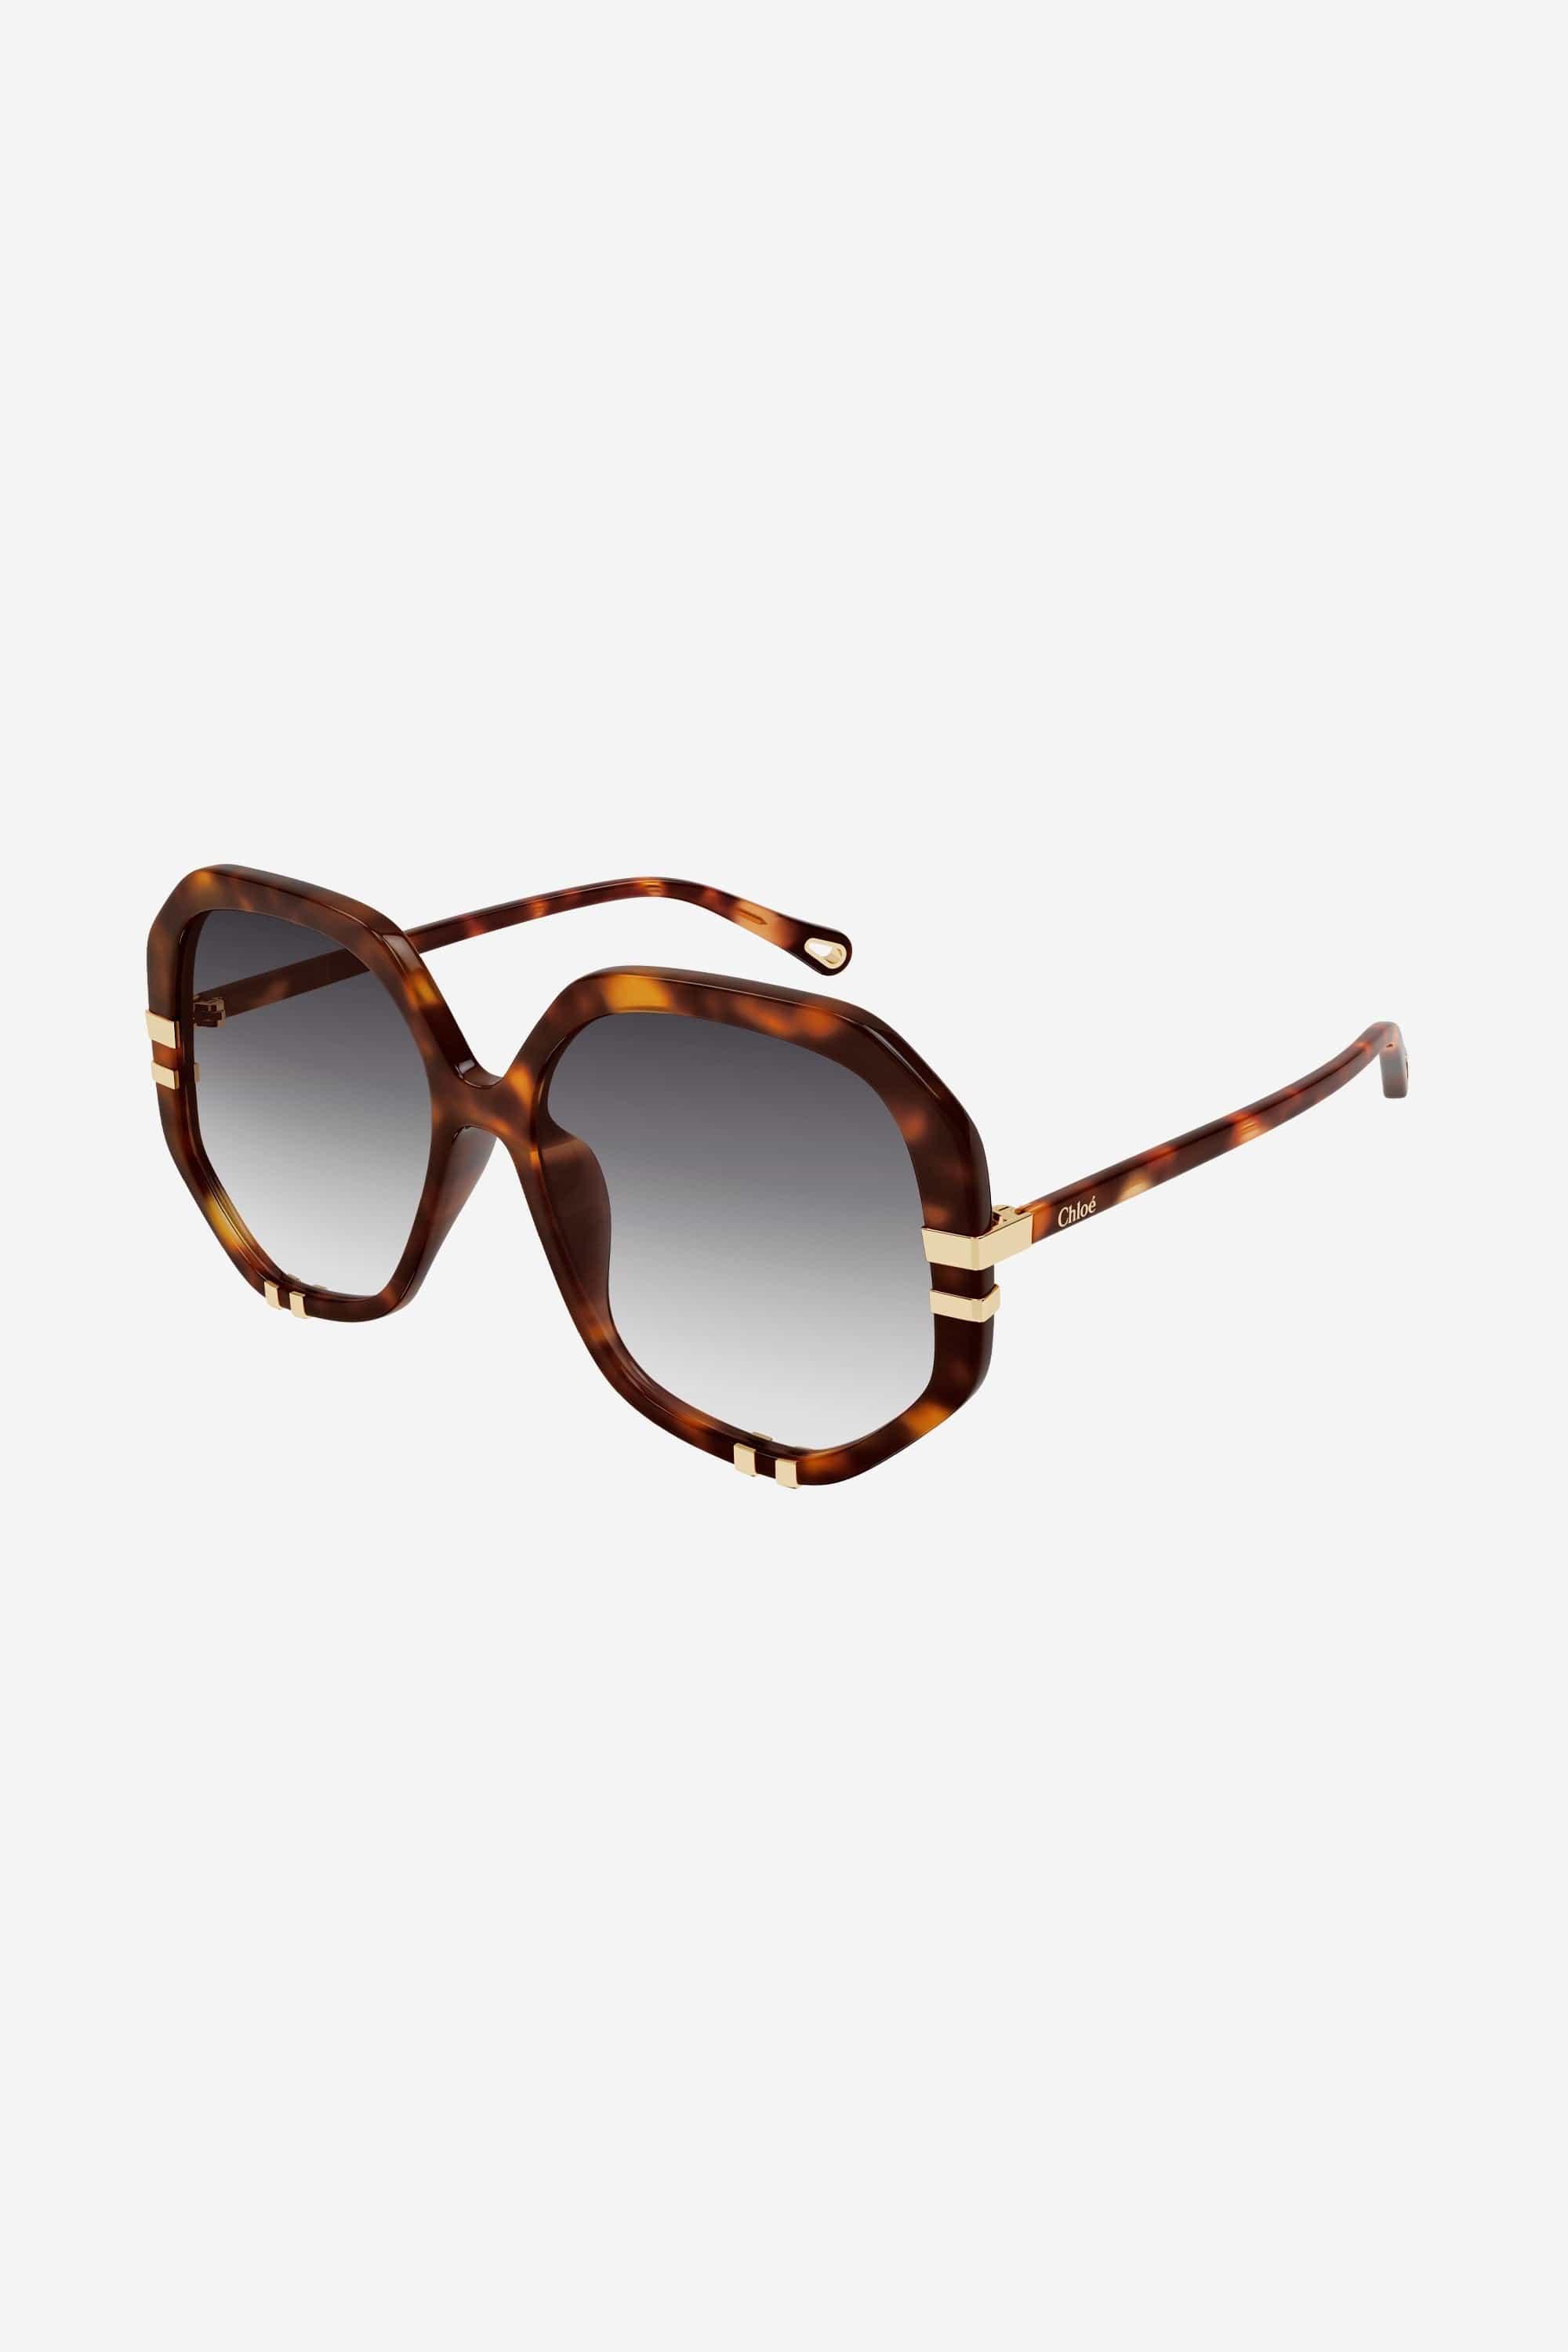 Chloé Chloé Havana Geometric Shape Sunglasses in Brown | Lyst